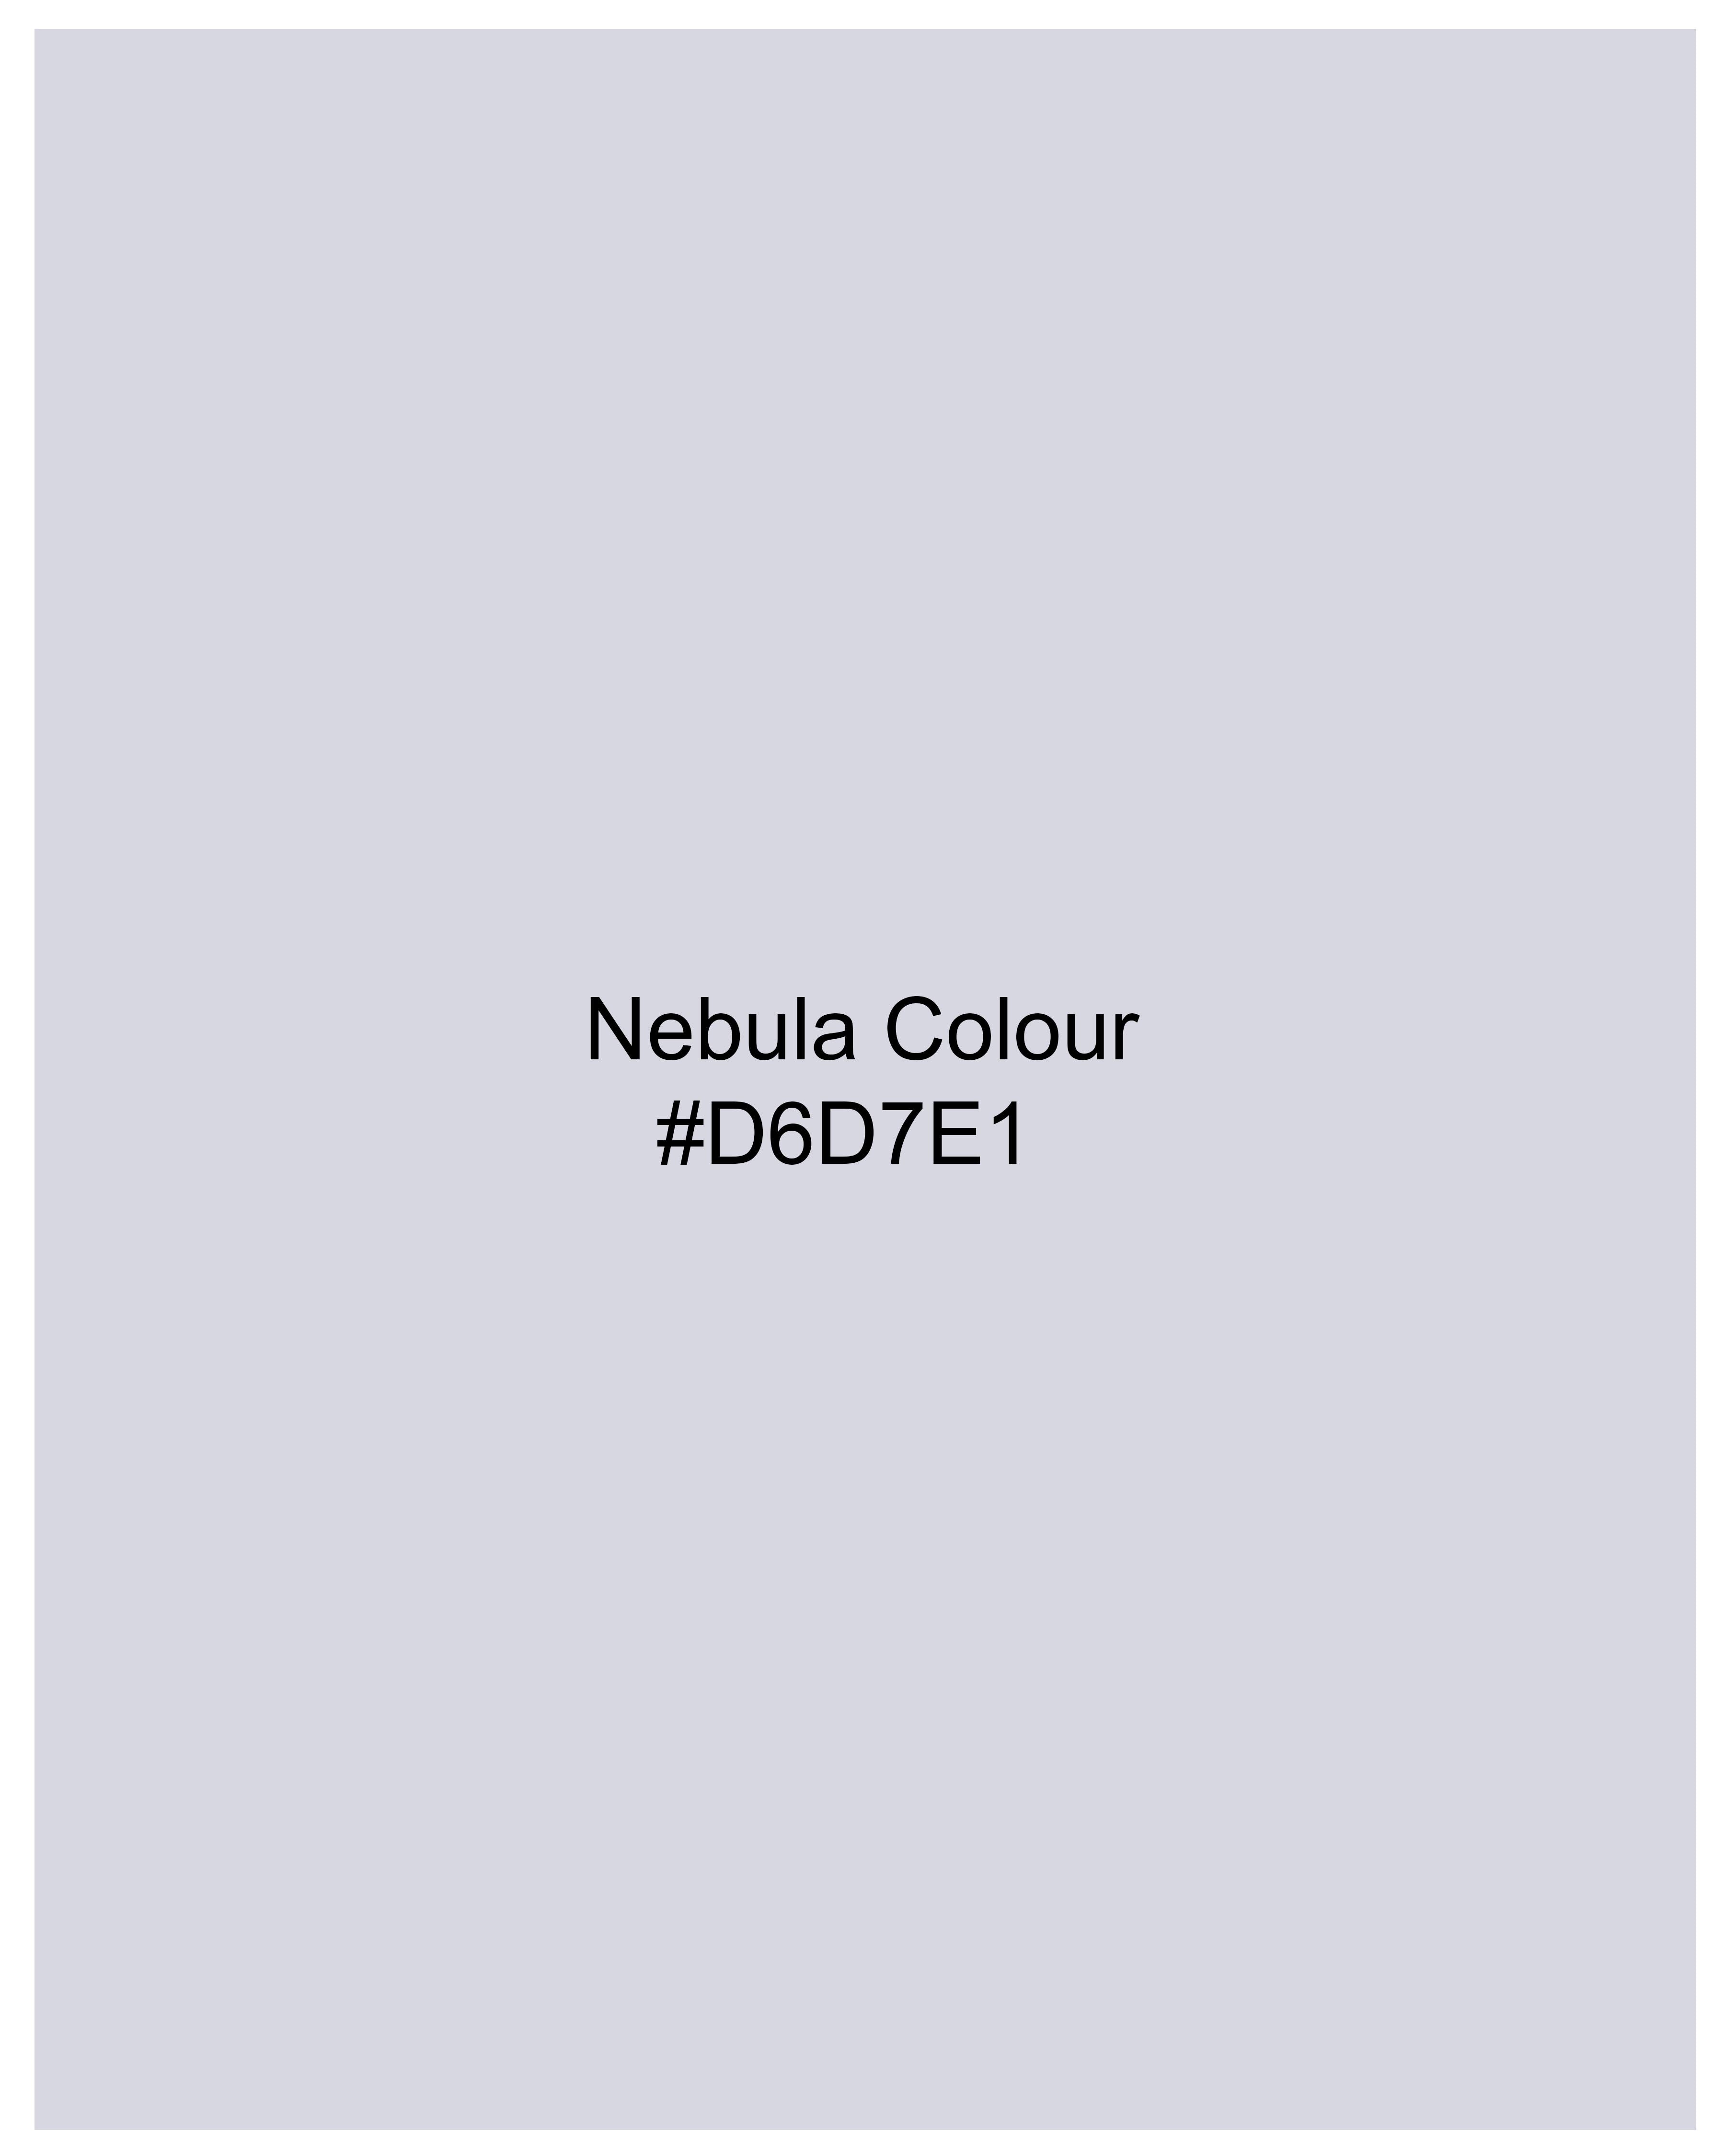 Nebula Light Blue Dobby Textured Premium Giza Cotton Shirt 9231-38,9231-H-38,9231-39,9231-H-39,9231-40,9231-H-40,9231-42,9231-H-42,9231-44,9231-H-44,9231-46,9231-H-46,9231-48,9231-H-48,9231-50,9231-H-50,9231-52,9231-H-52